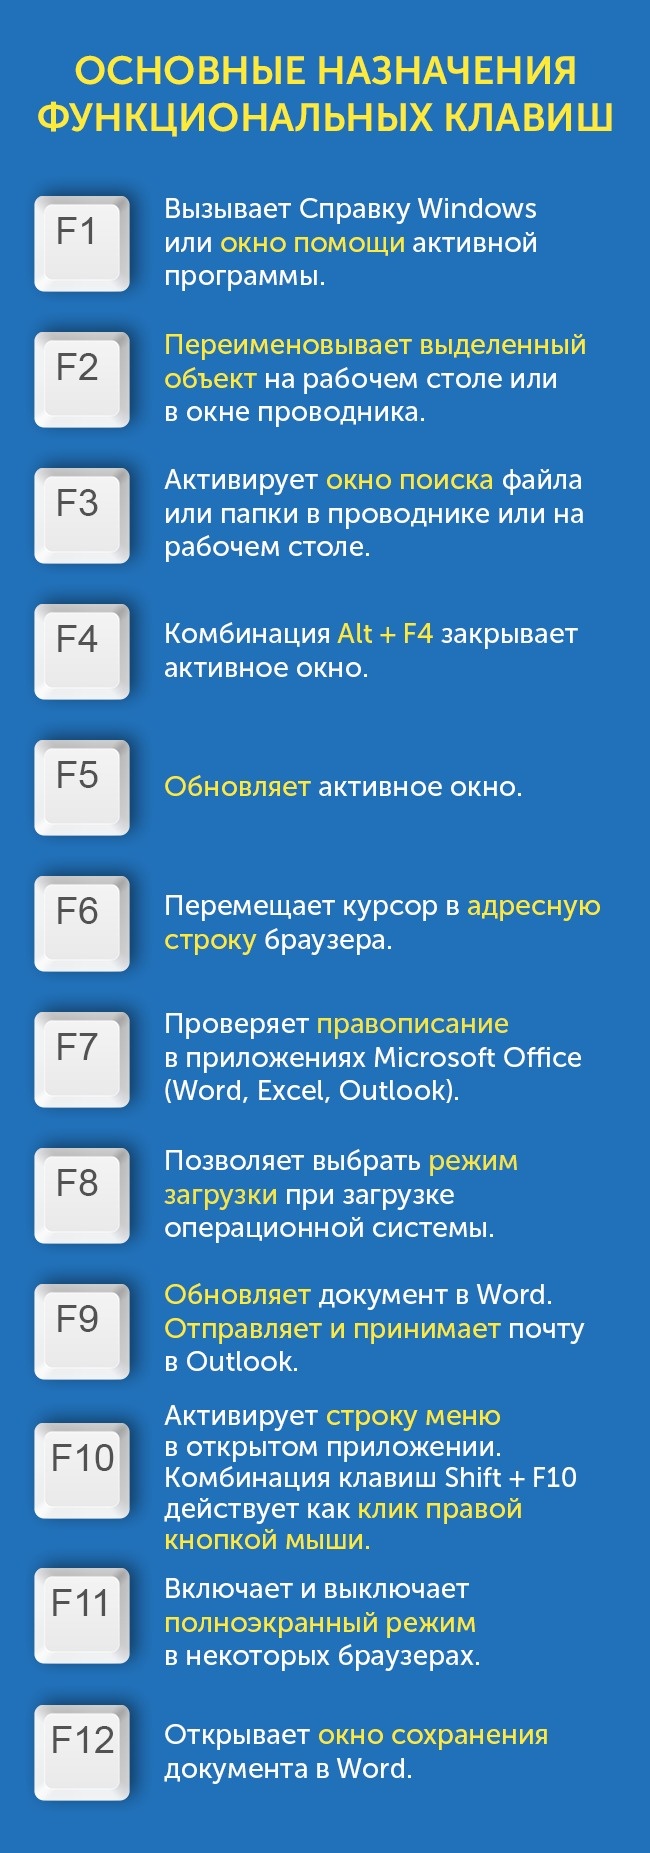 Function keys F1 to F12